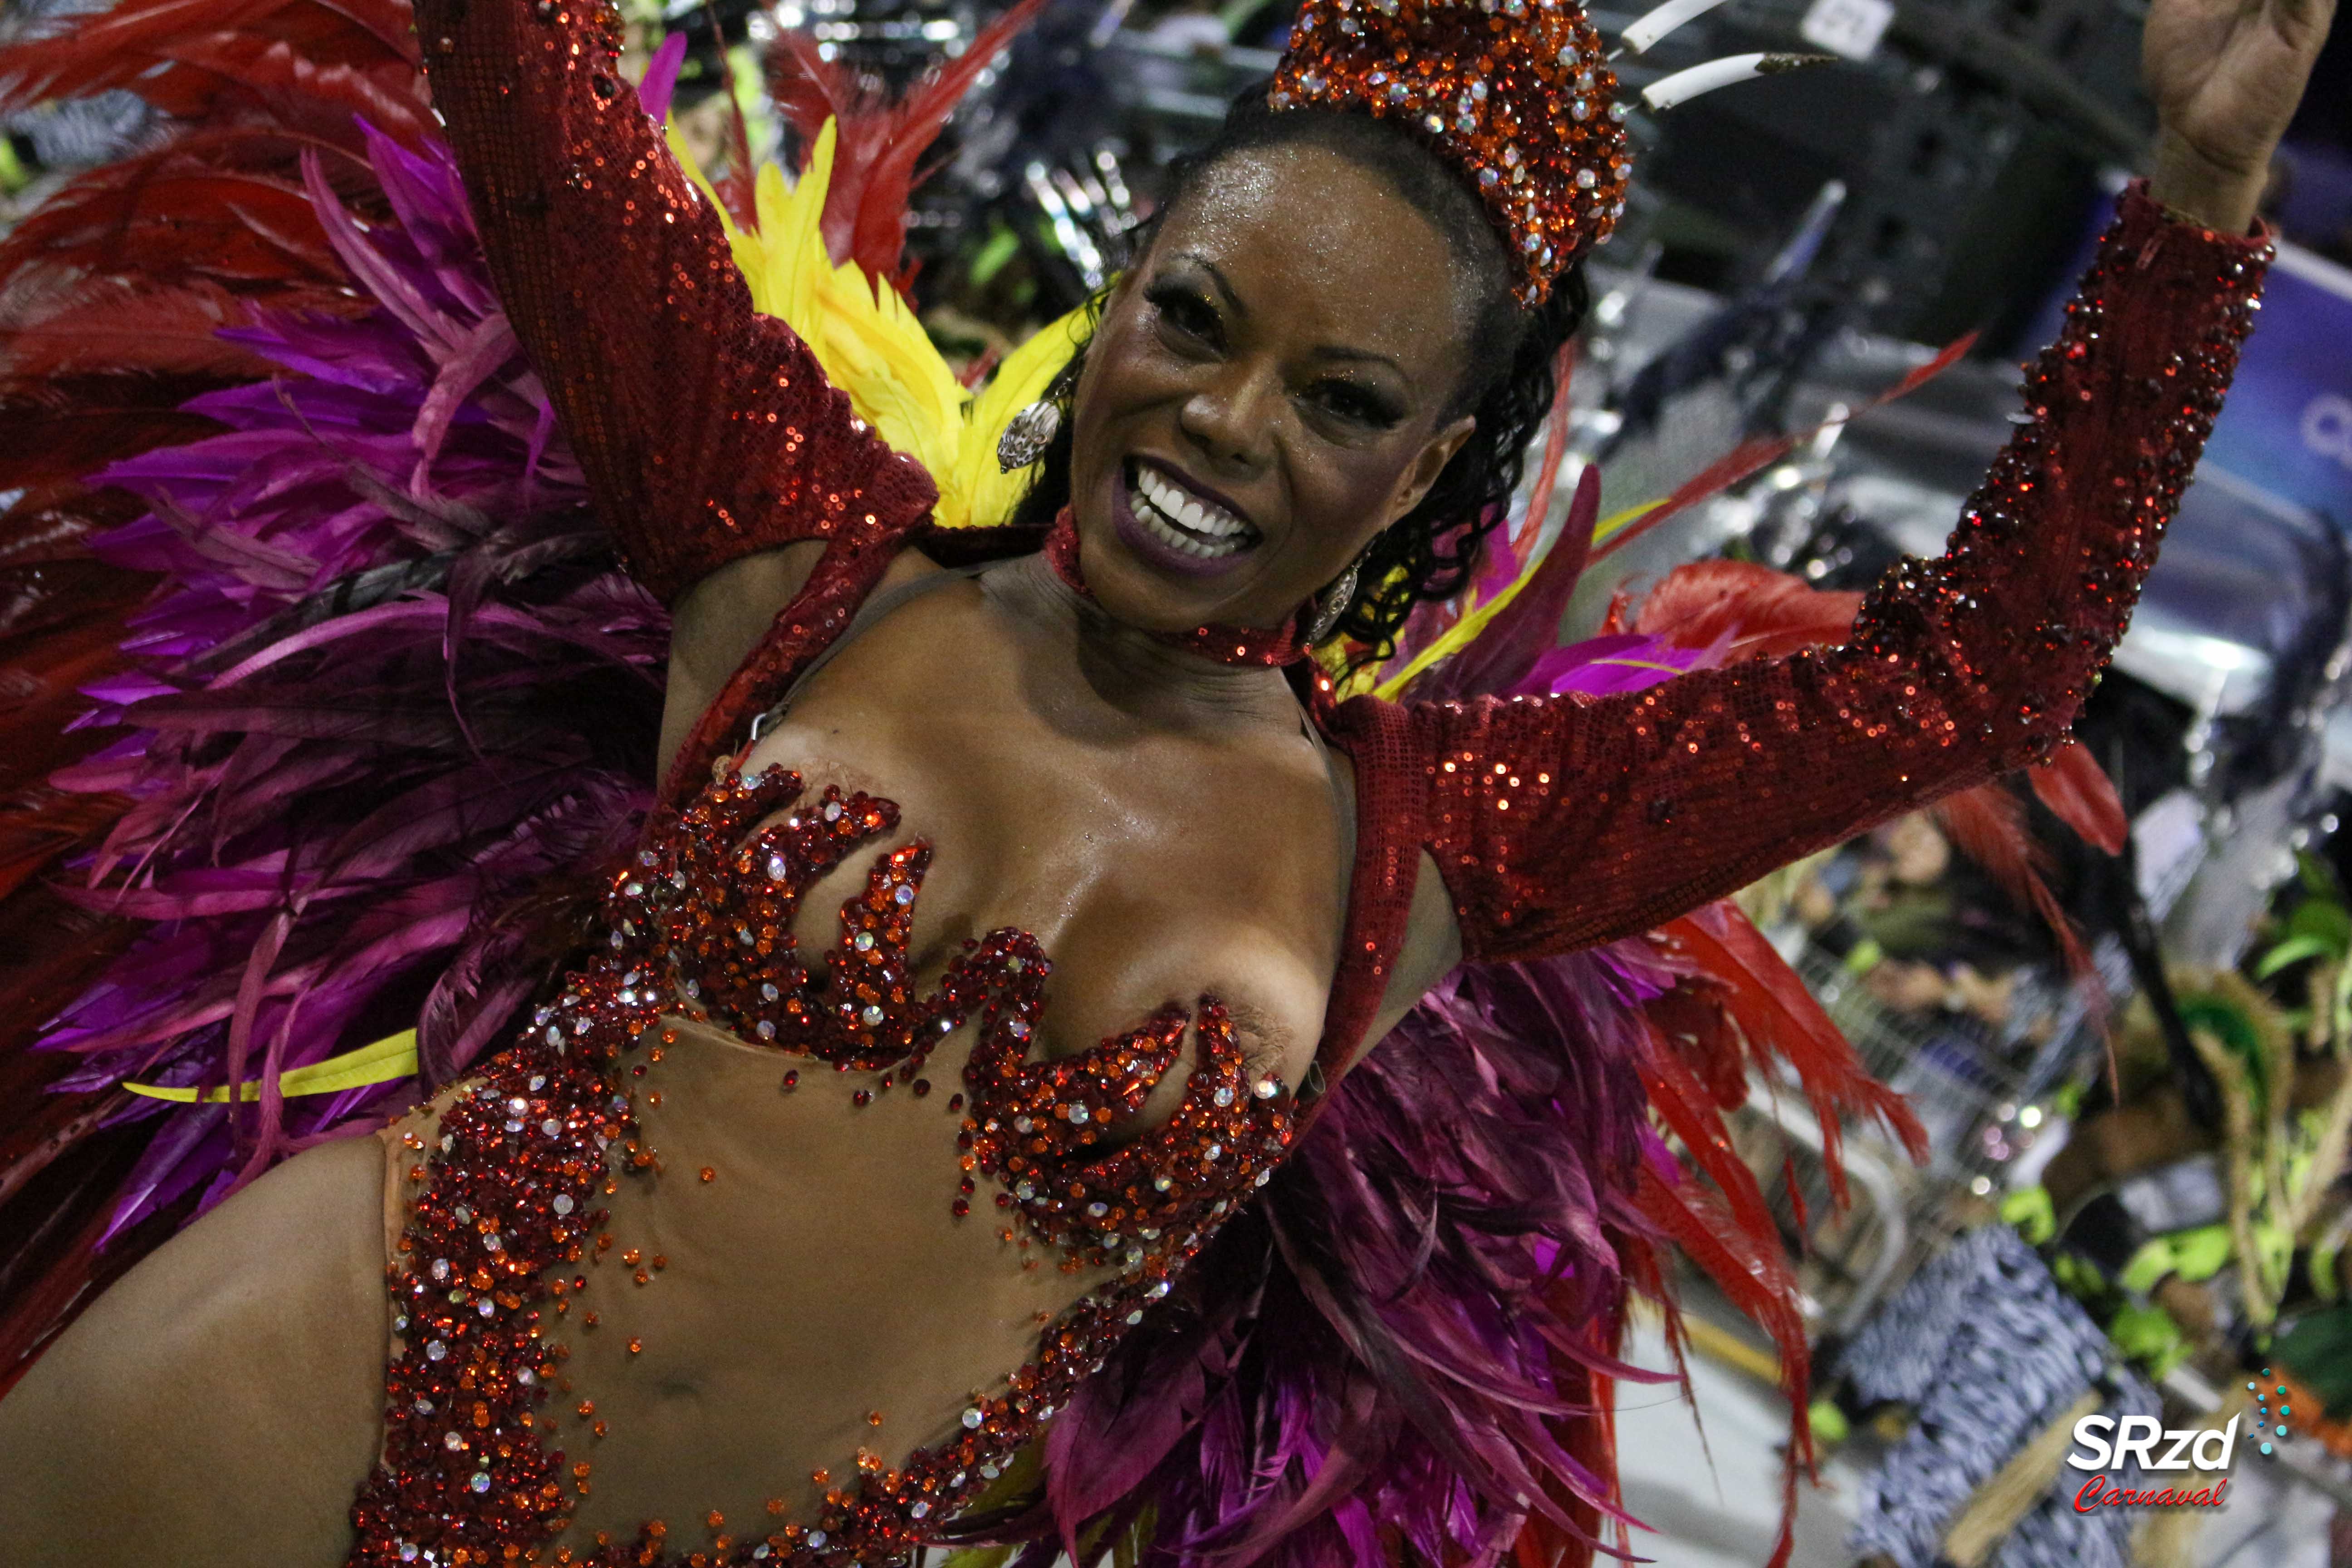 Ubuntu: leia a sinopse do enredo da Unidos do Peruche para o Carnaval 2020